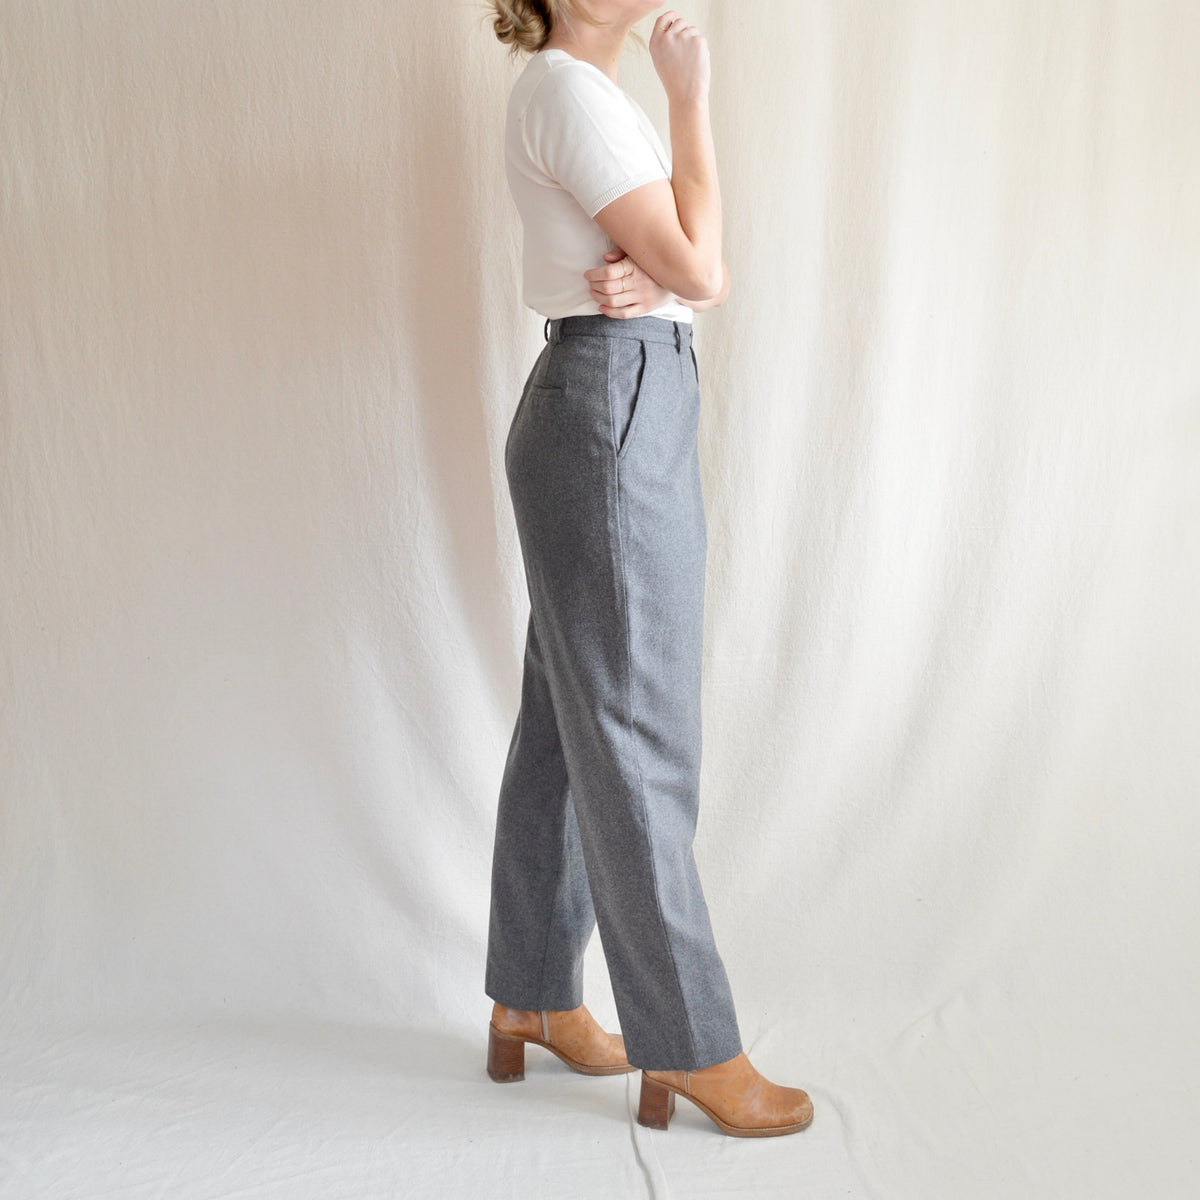 29 - 38 wide leg light pink drawstring elastic linen blend pants